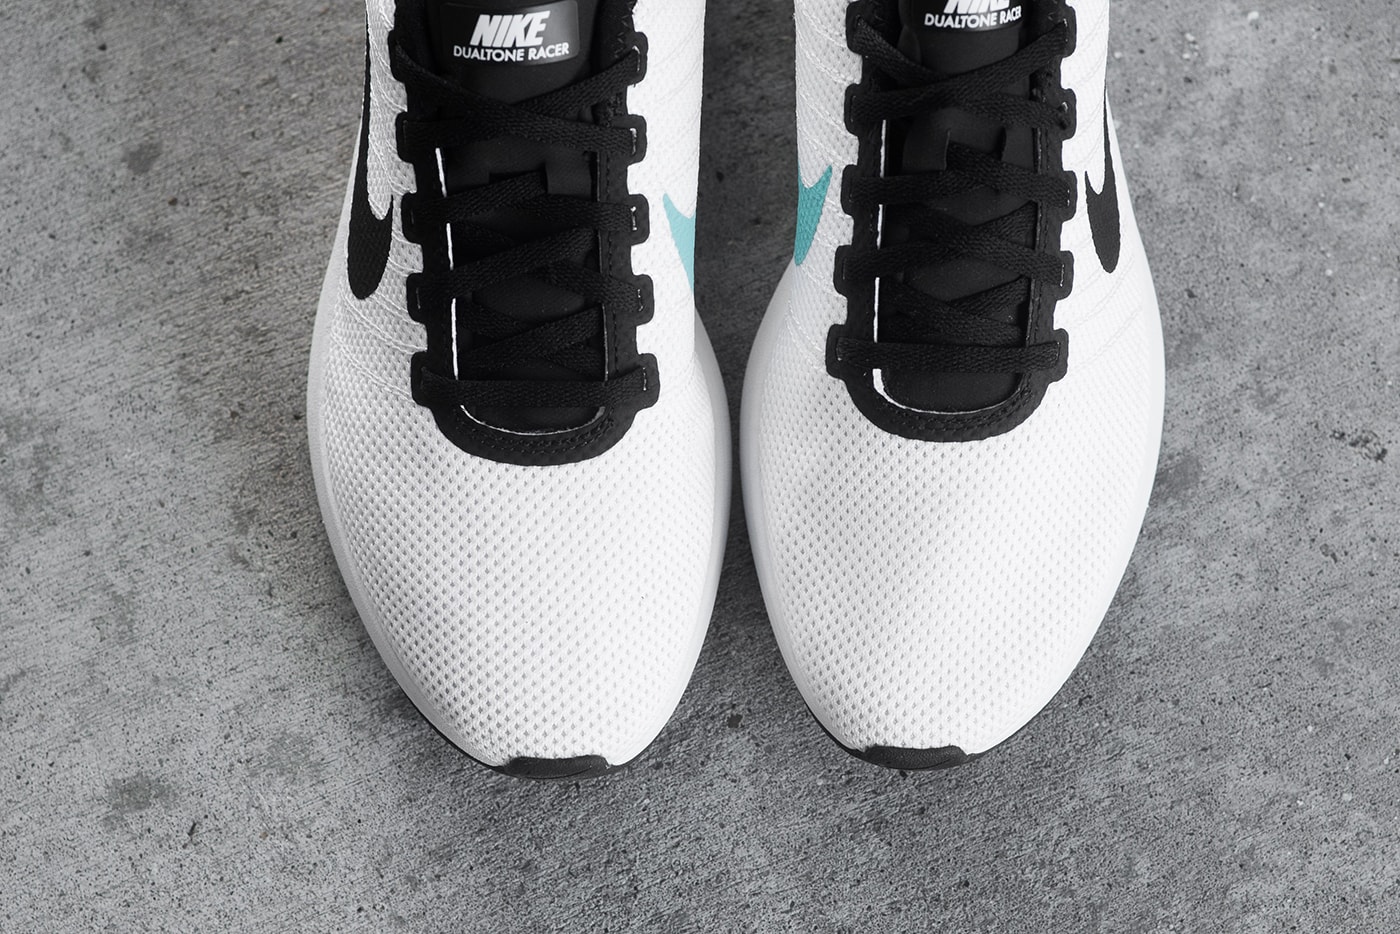 Nike Dualtone Racer White Black Teal Running Shoe Release